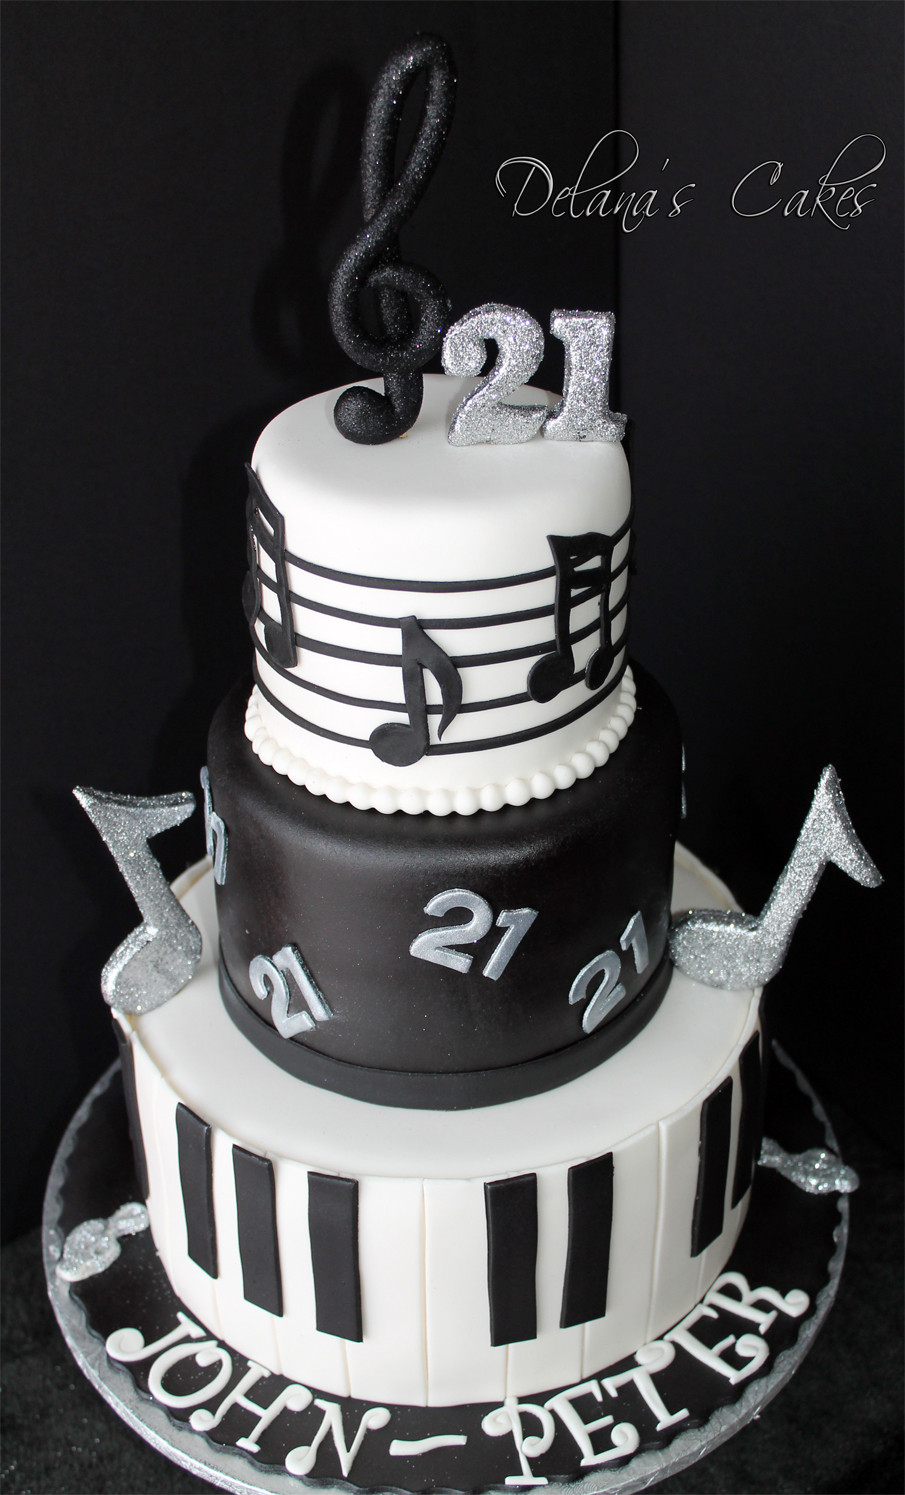 Music Birthday Cake
 Delana s Cakes Musical Notes Cake